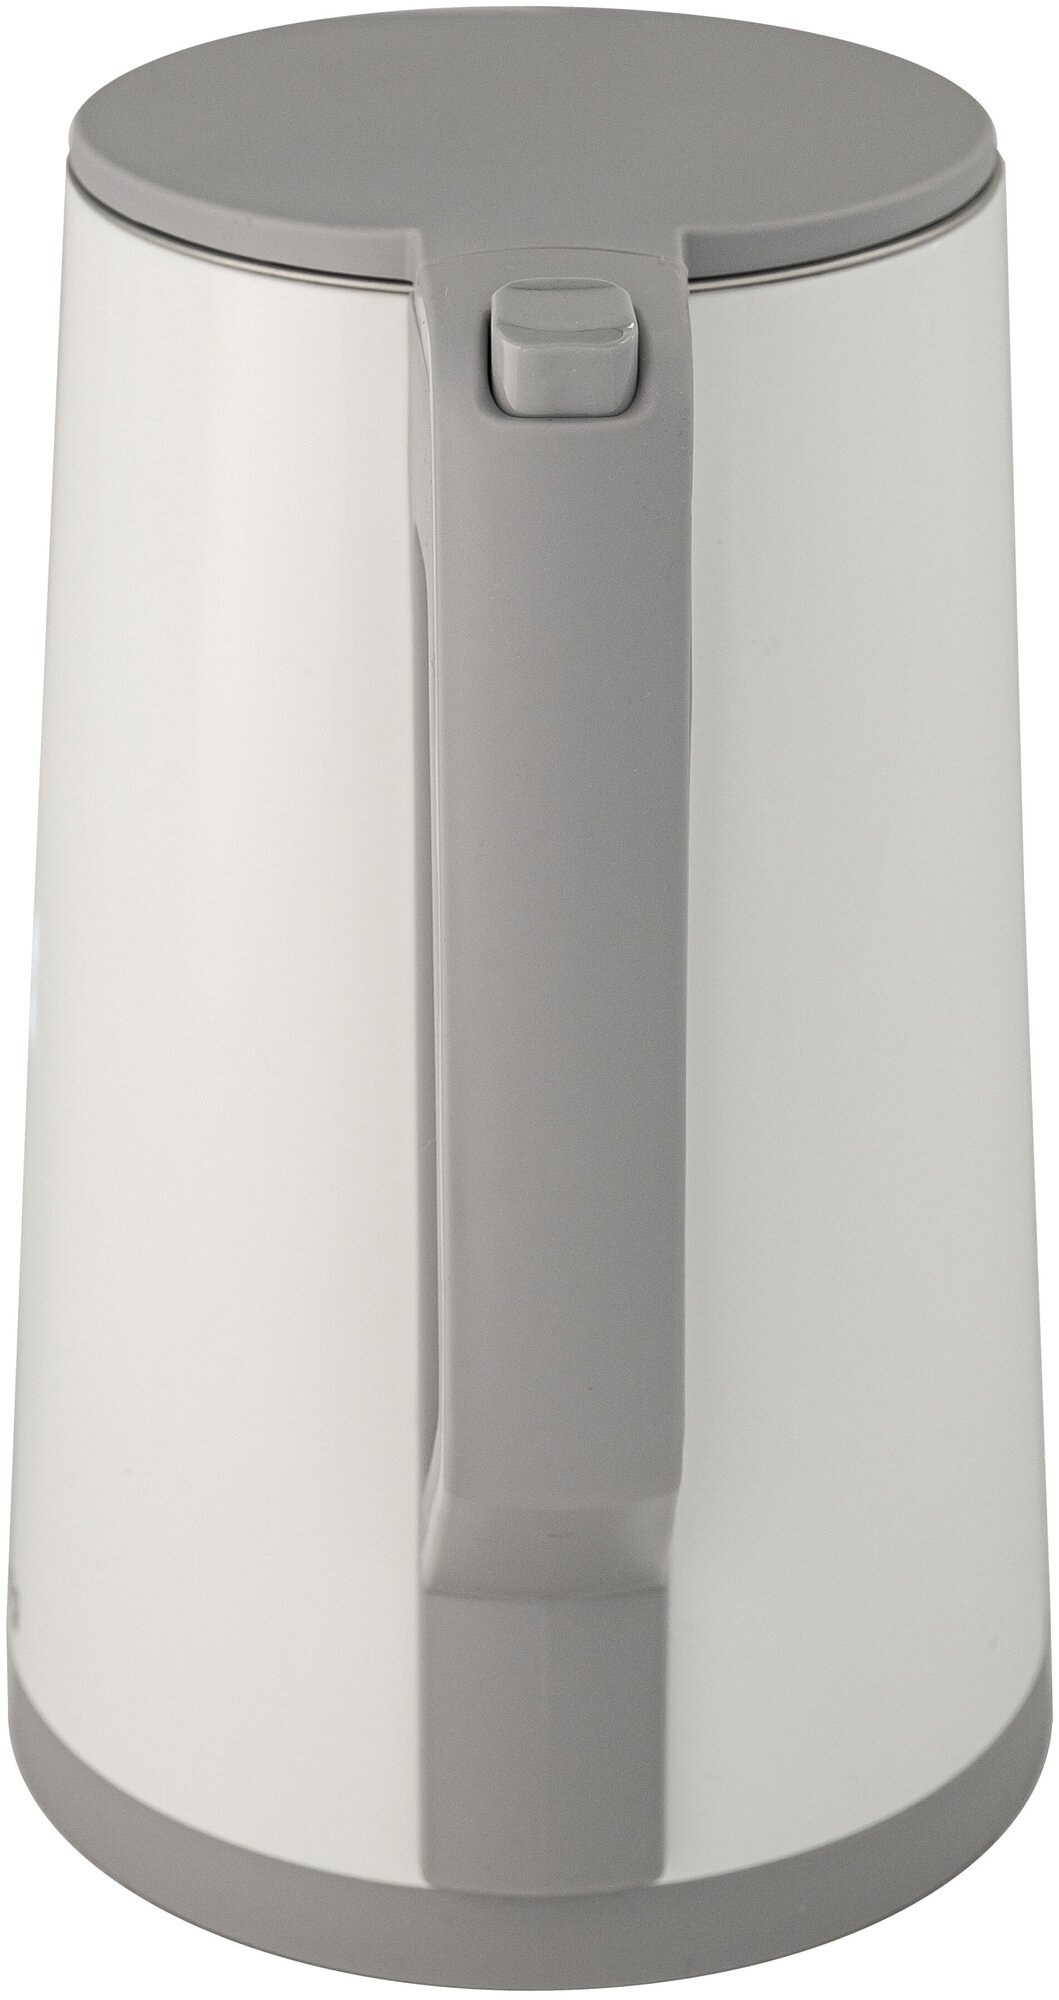 Умный электрический чайник Sibling Powerspace-SK (бело-серый) (Powerspace-SK)